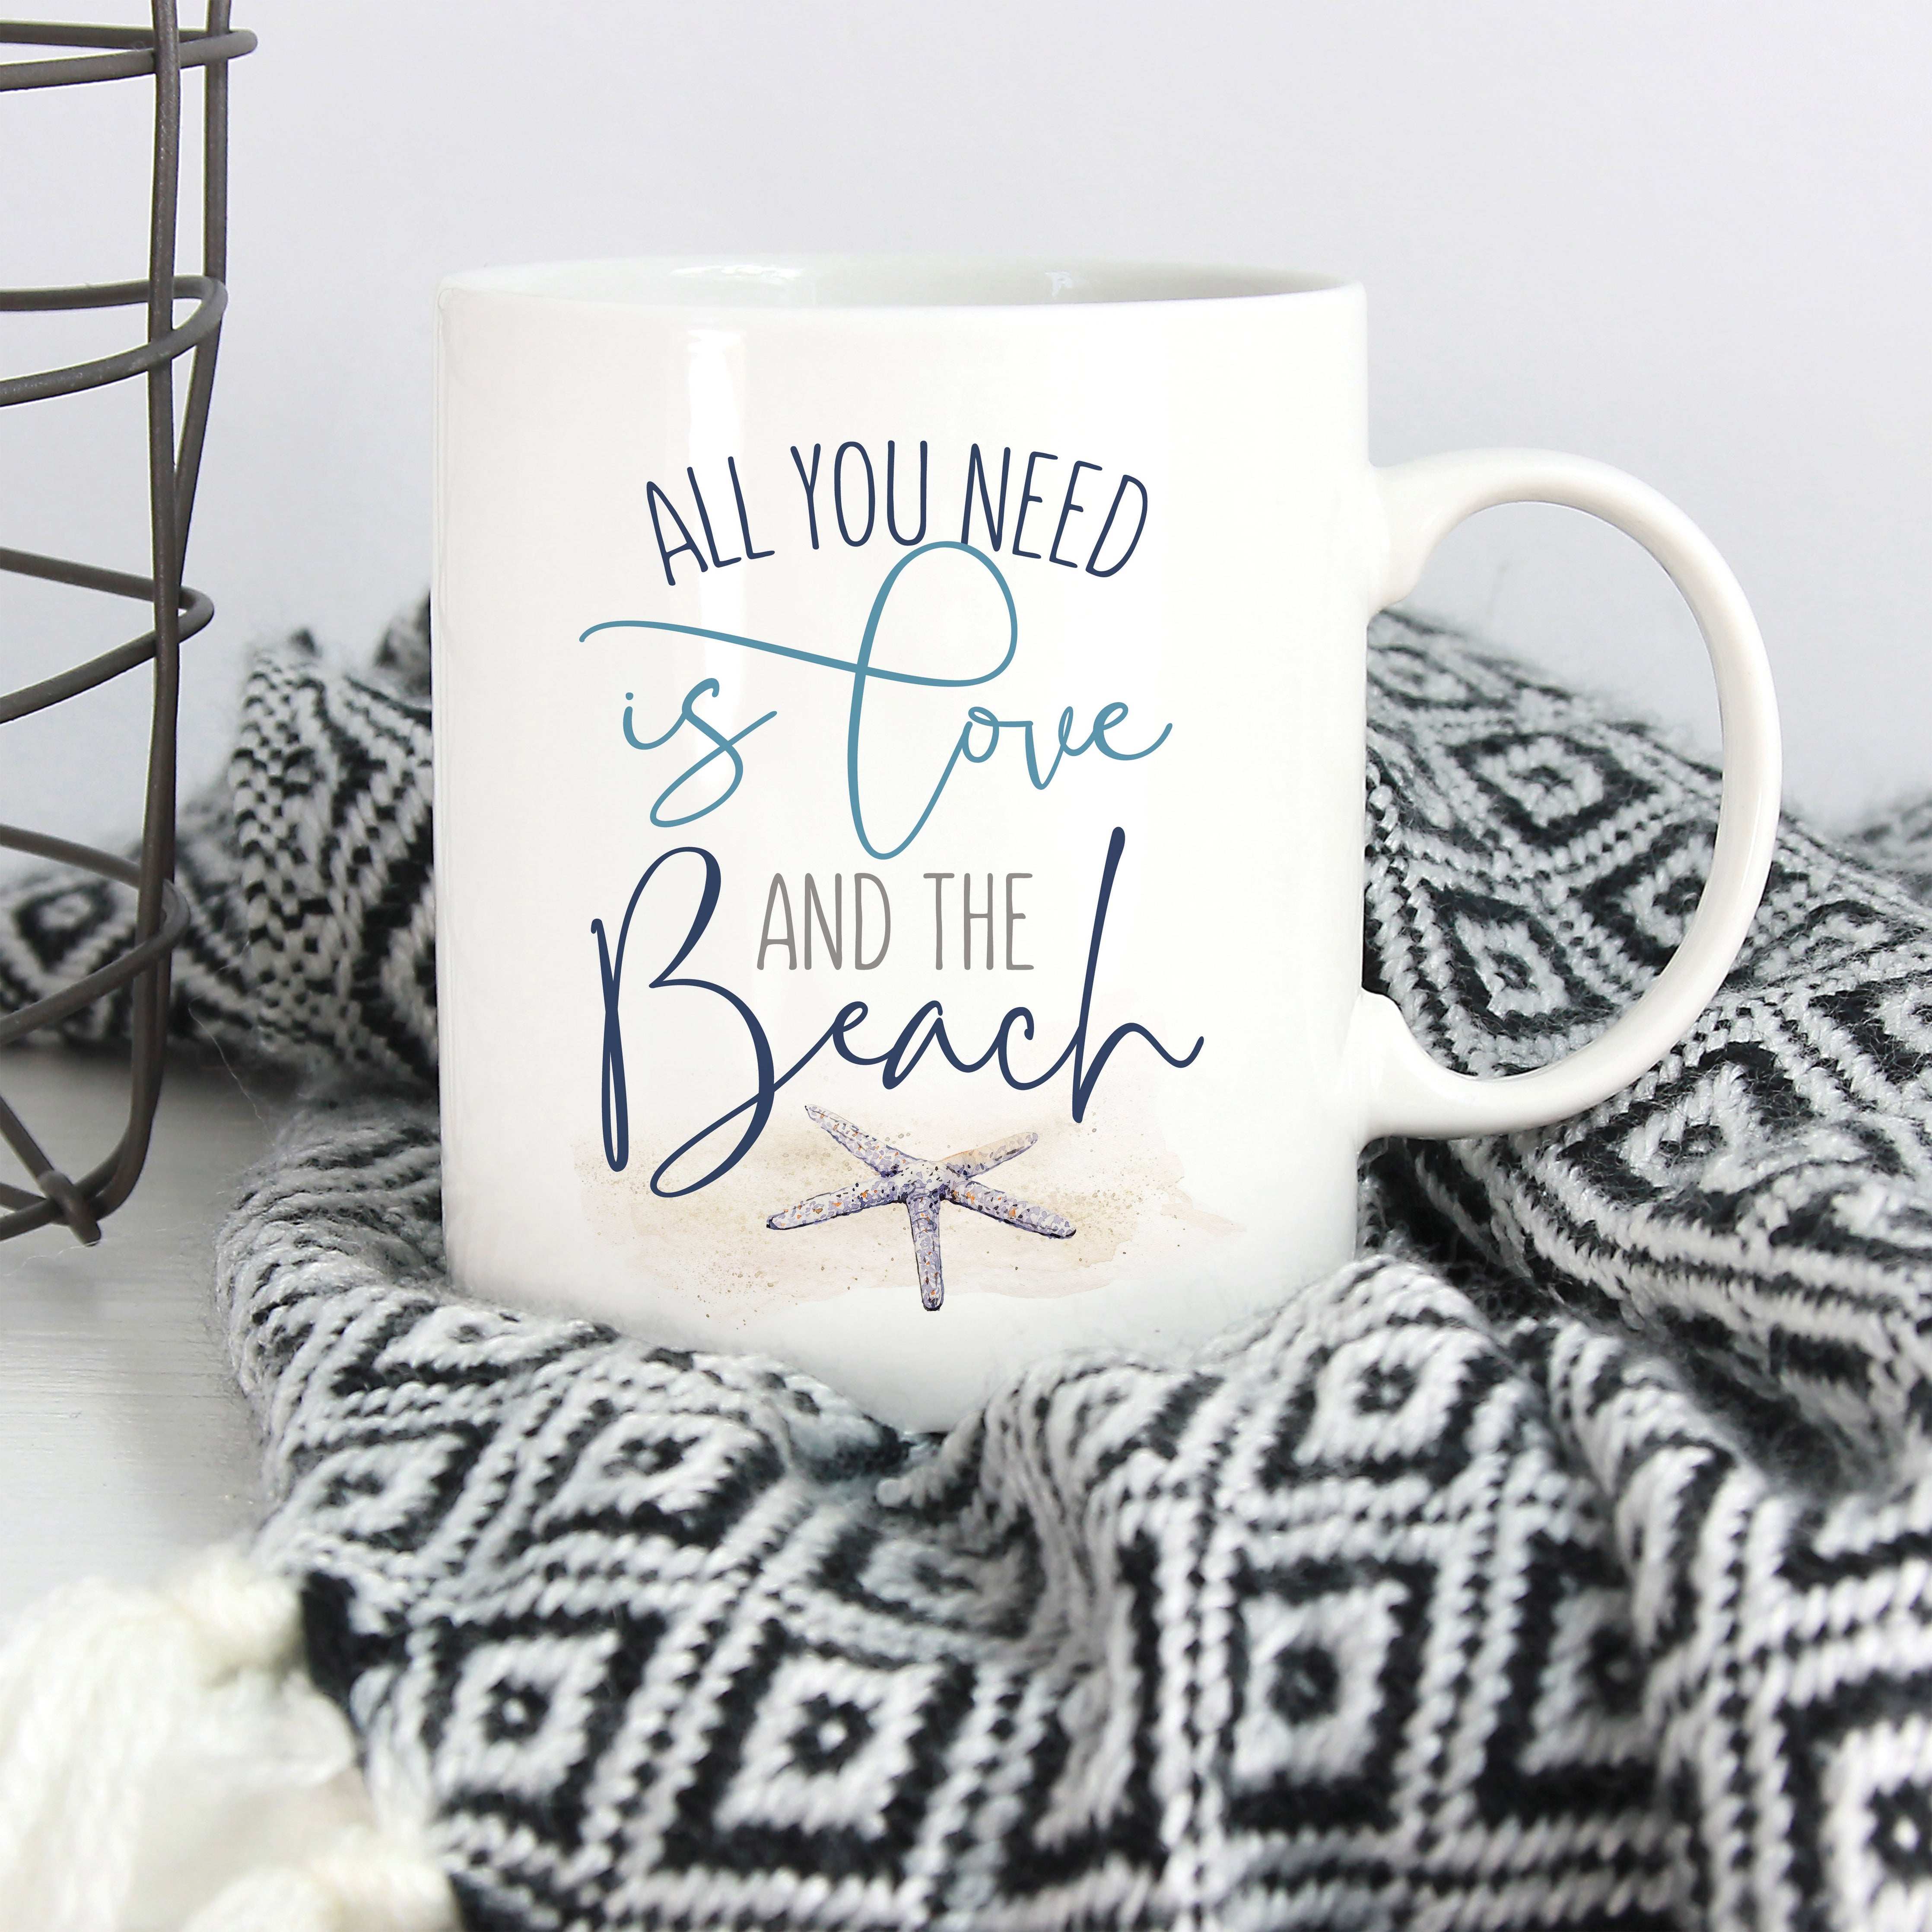 All You Need is Love and the Beach Mug